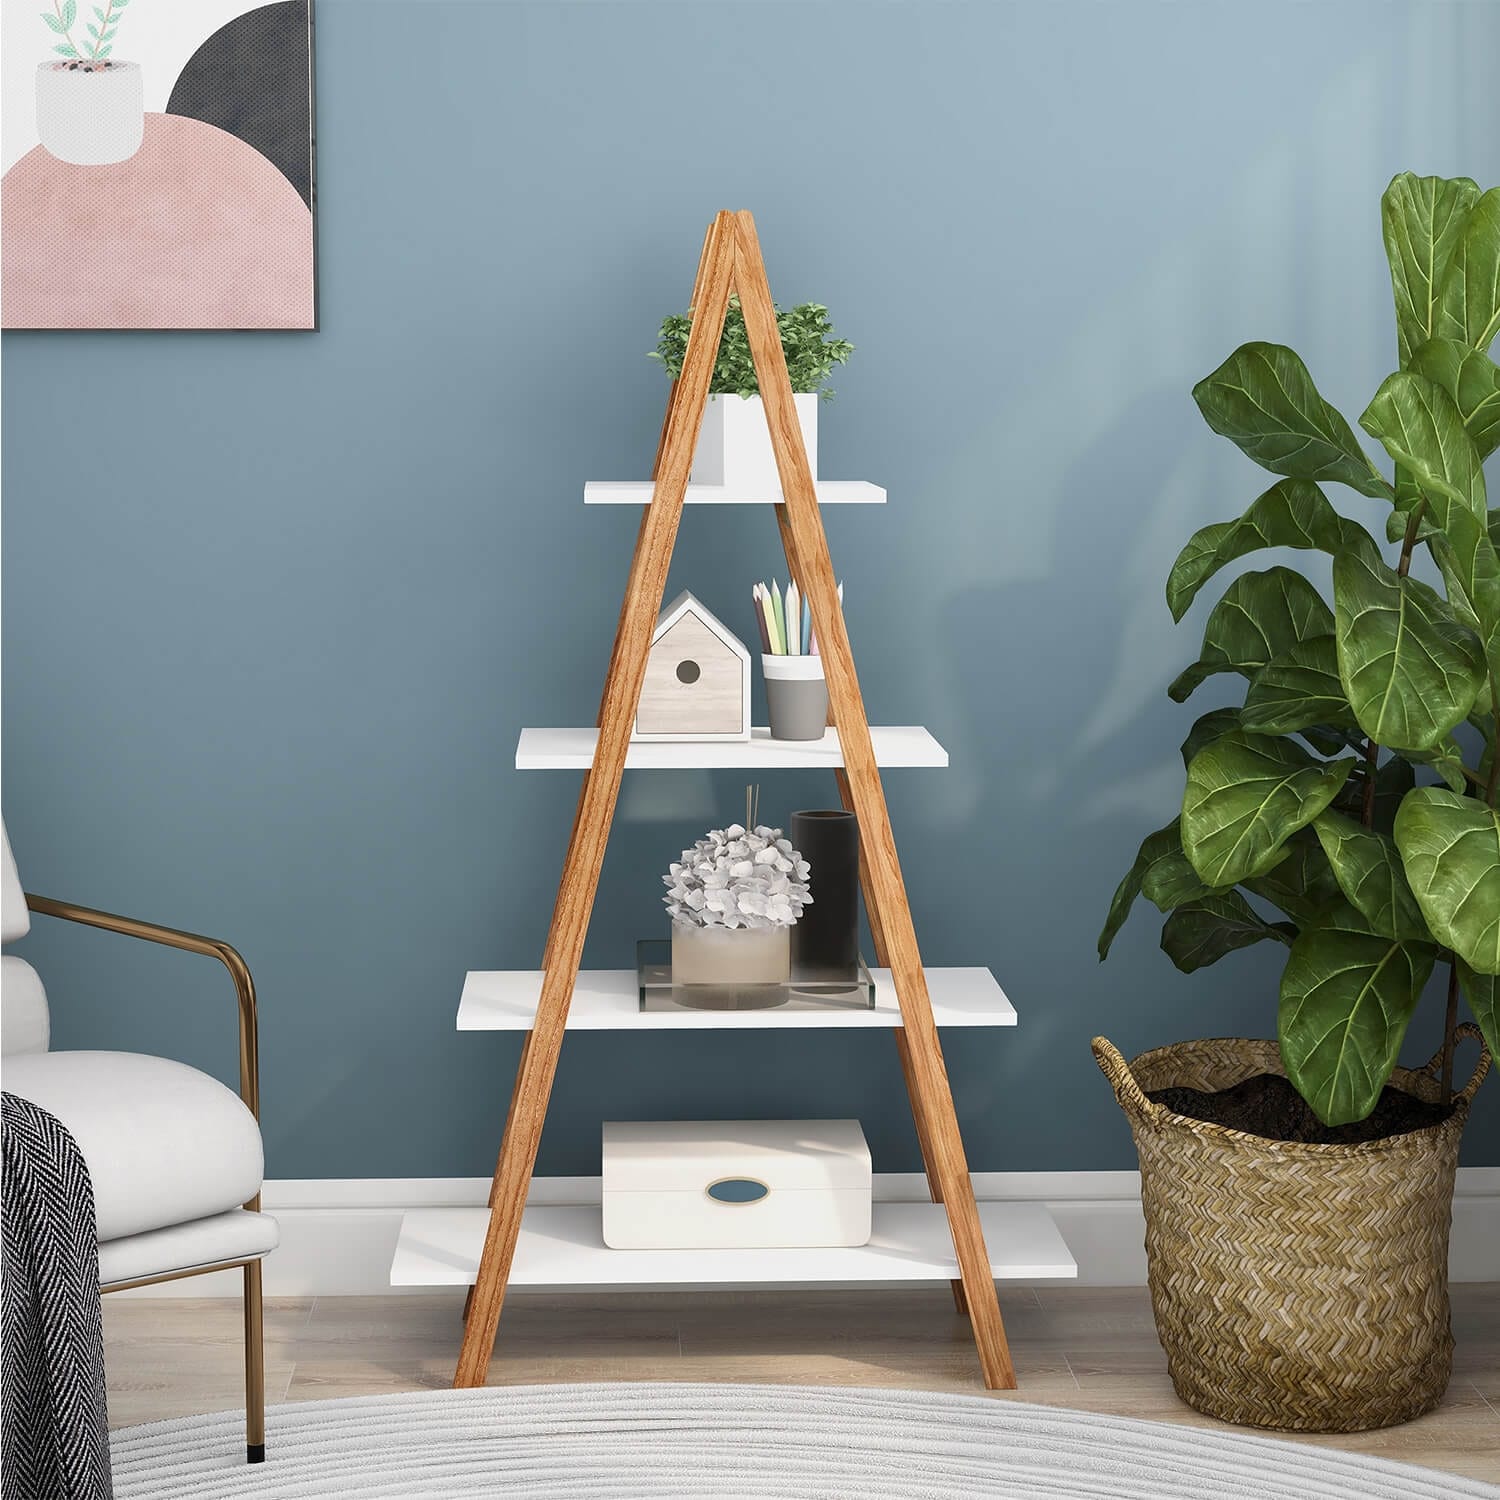 White/Bamboo 3-Tier Bath Leaning Ladder Shelf